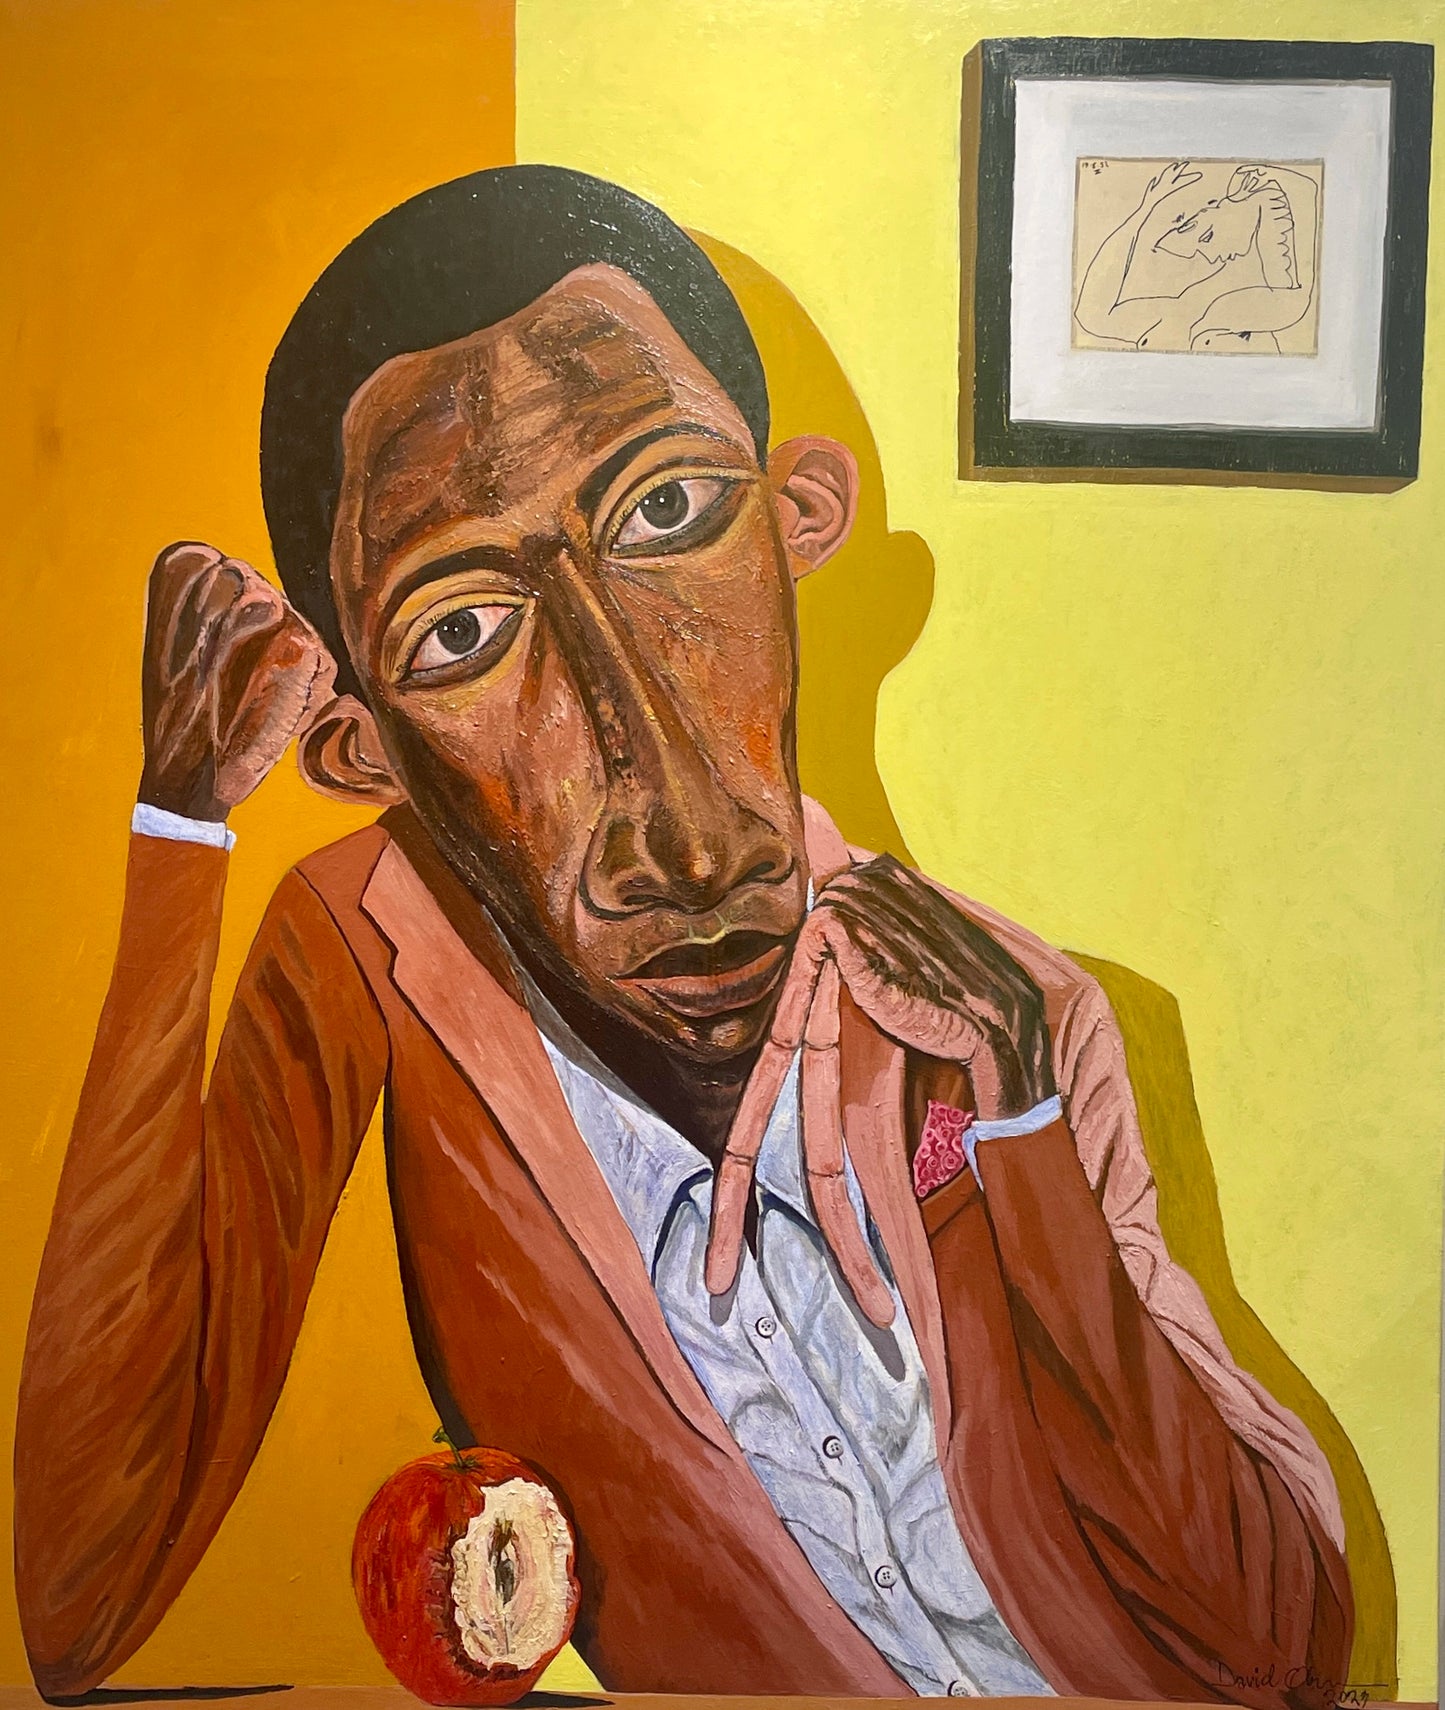 Maleriet "Man in his thoughts" av David Obi